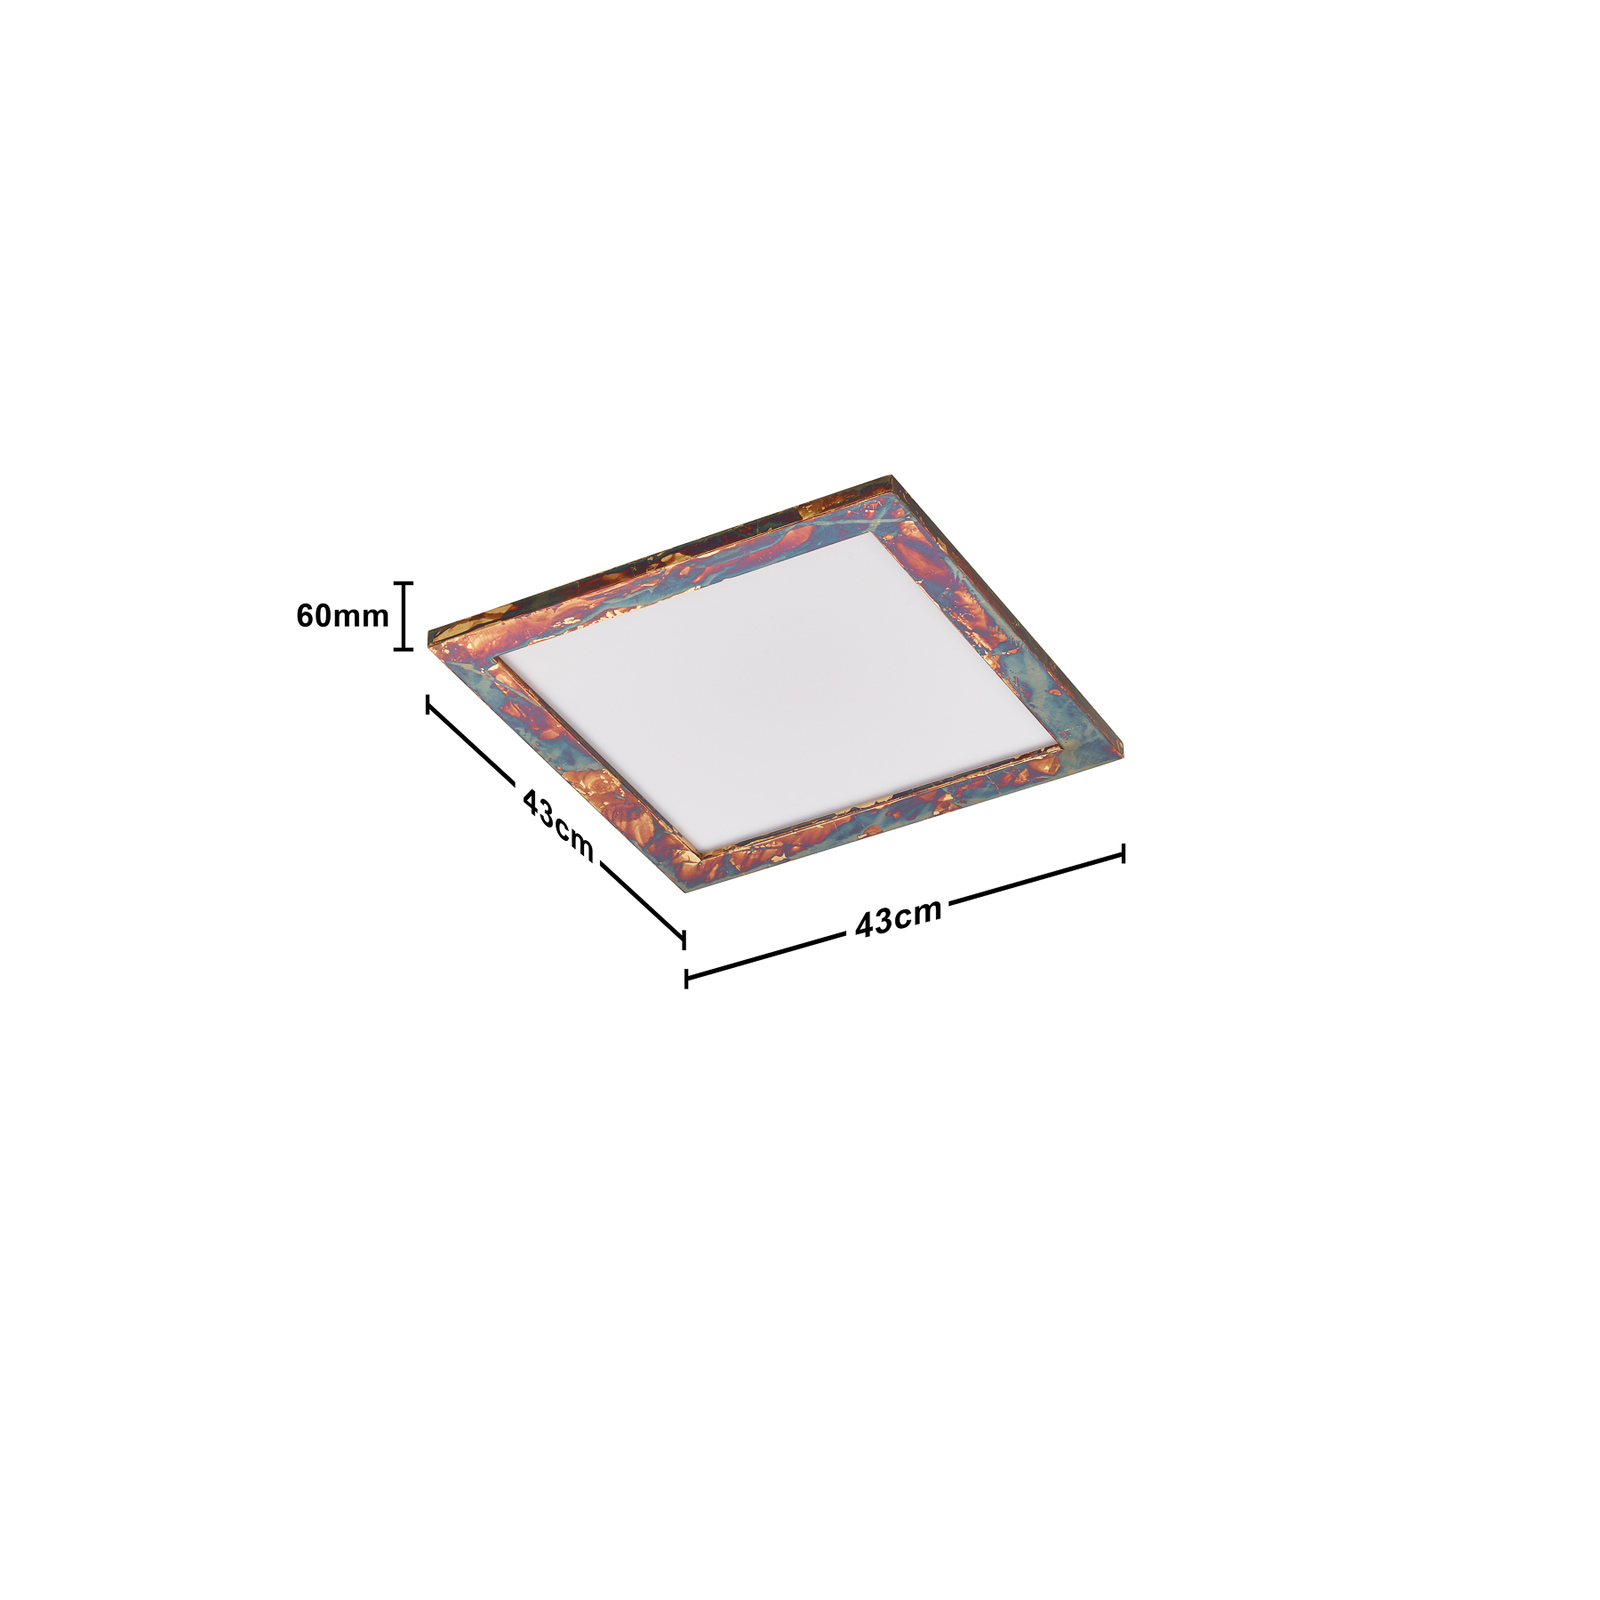 Quitani Aurinor LED panel, arany színű, 45 cm-es